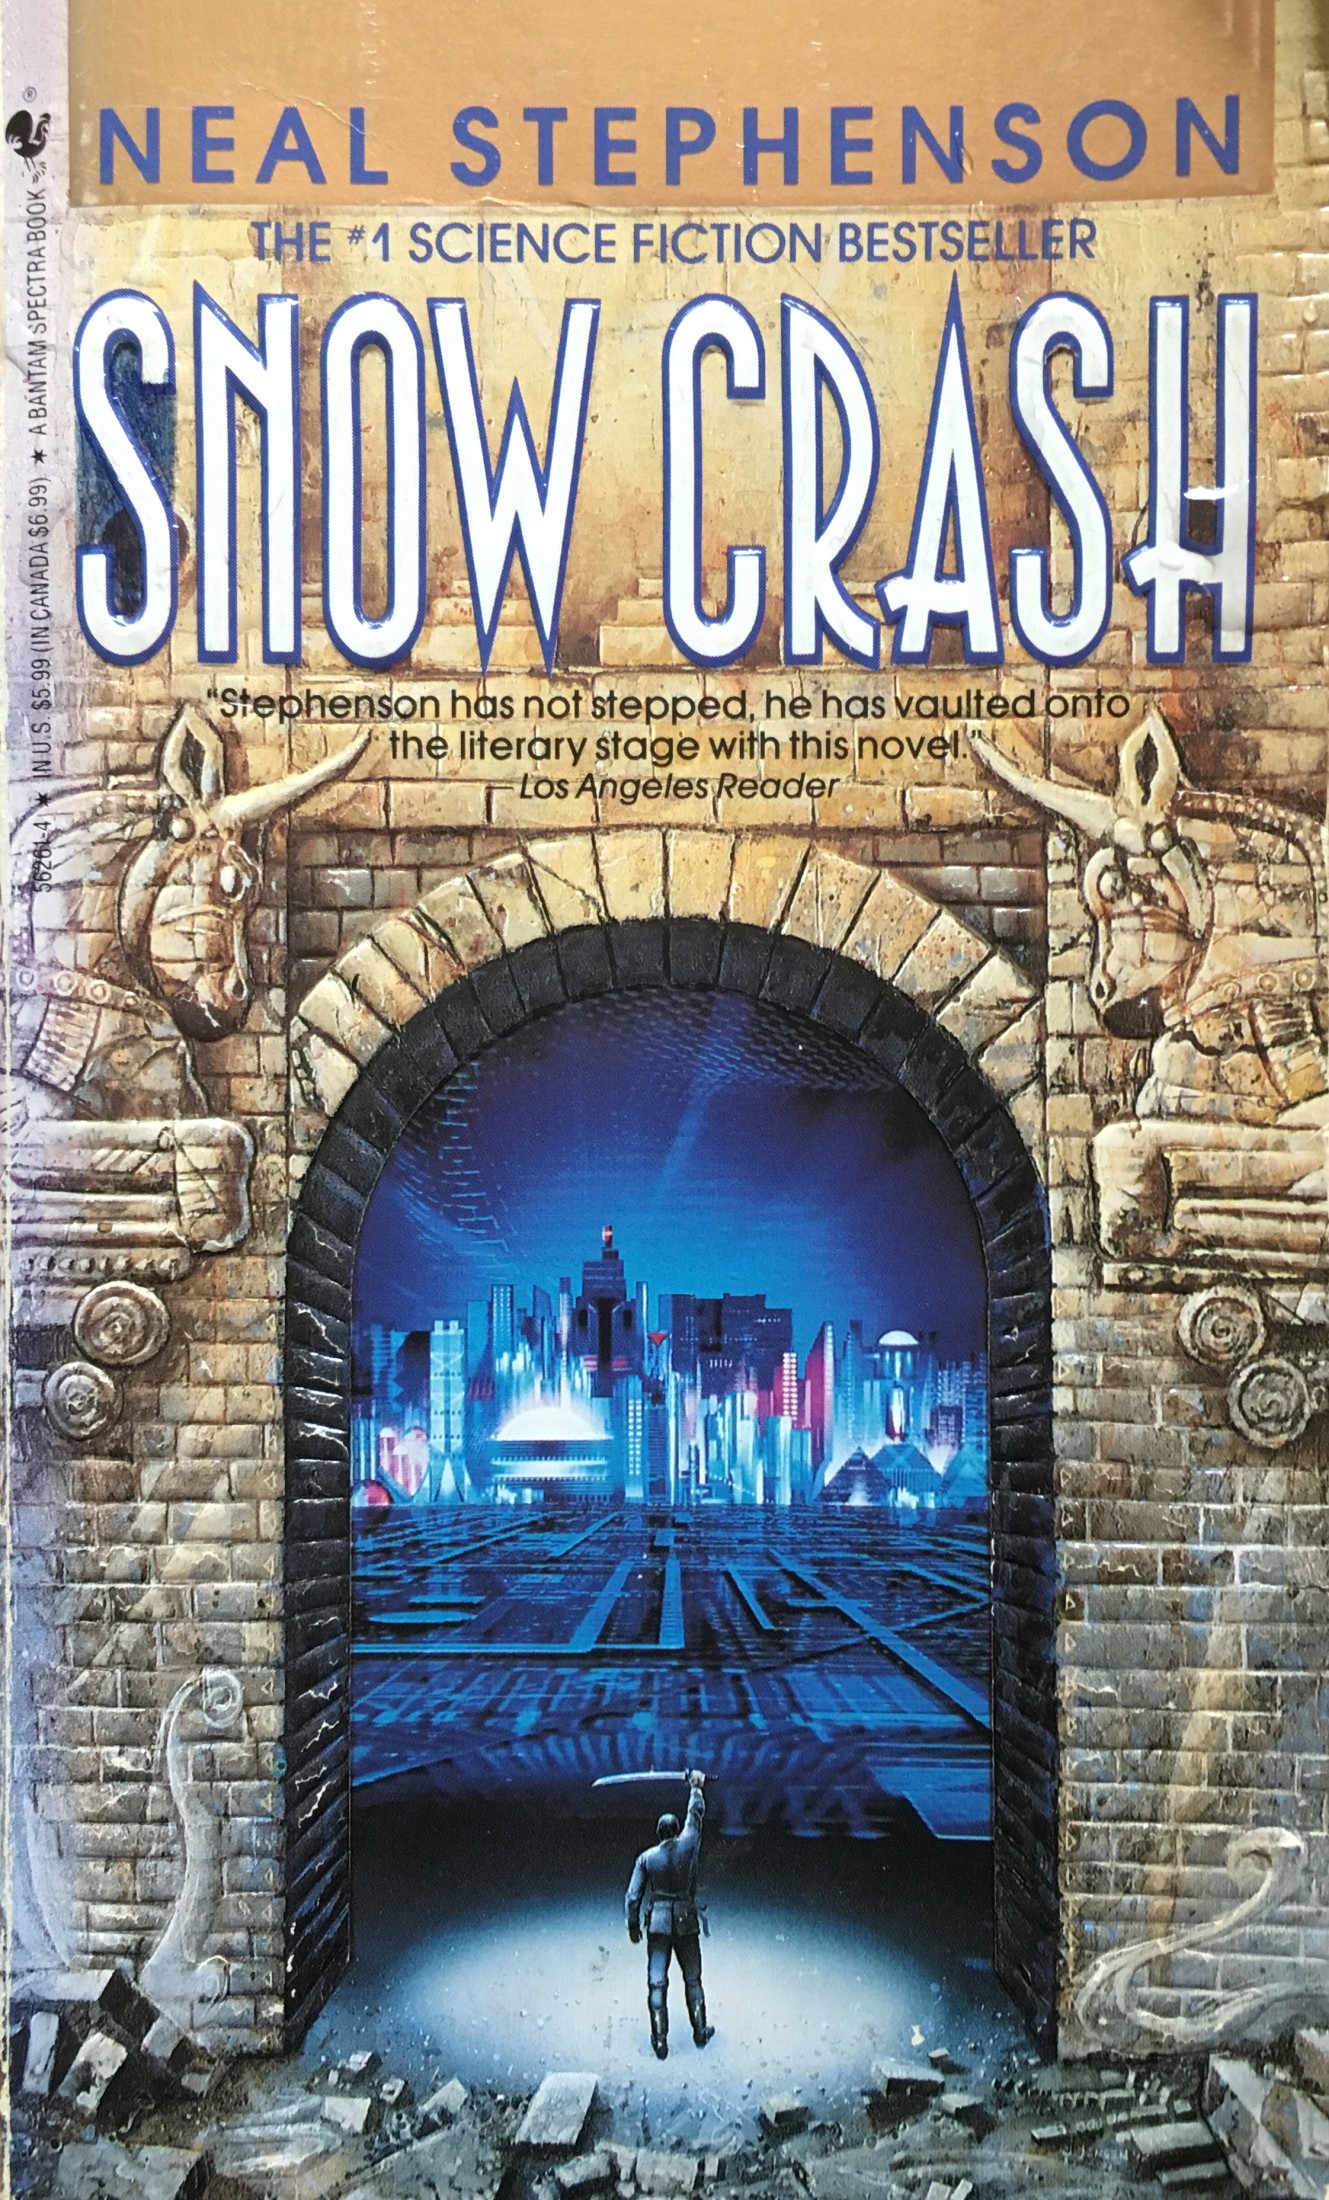 Snow Crash cover